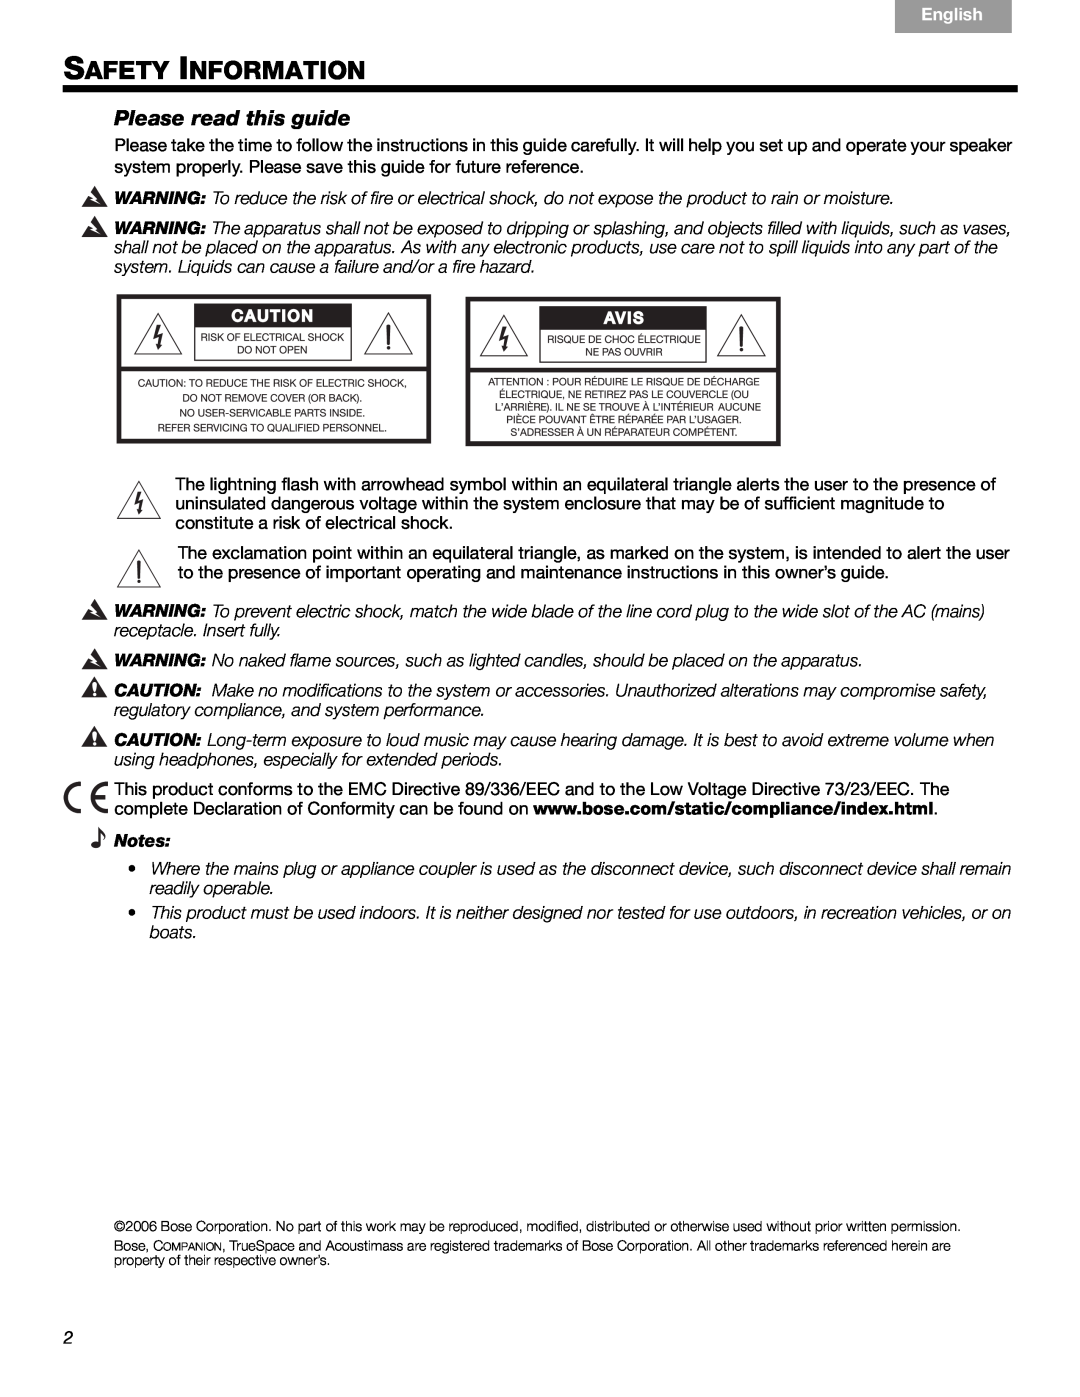 Bose 40326, Companion (R) 5 manual Safety Information, Please read this guide, Français Español, English 